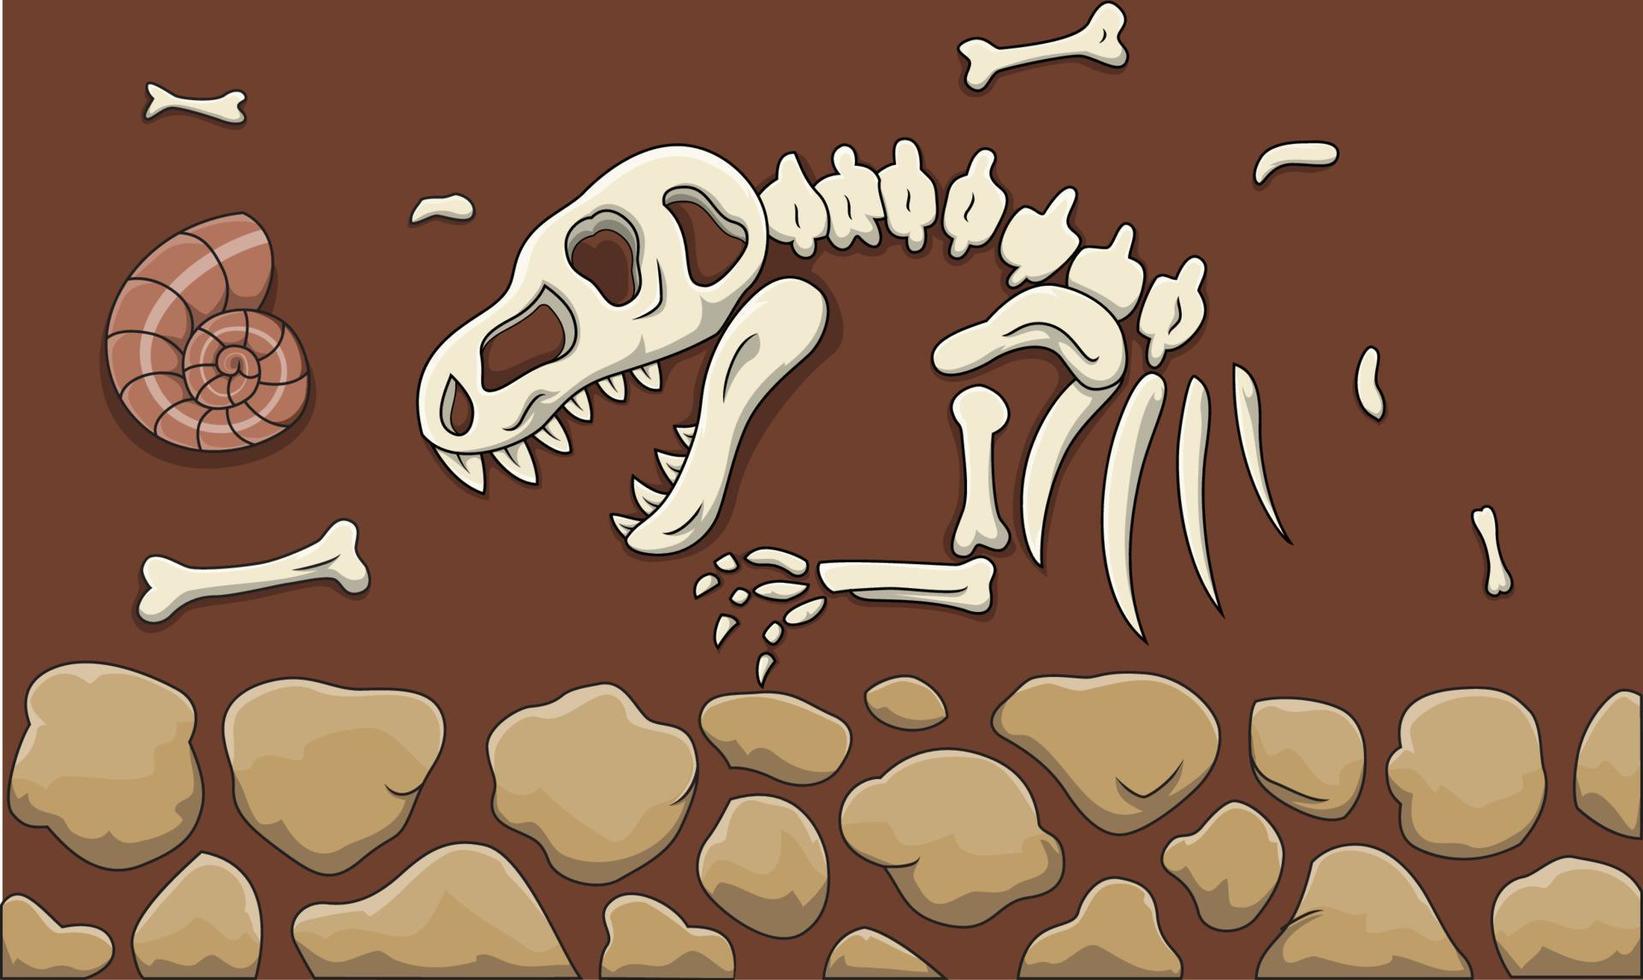 dibujos animados de animales fósiles con dinosaurios, peces, huesos y  conchas 7098408 Vector en Vecteezy